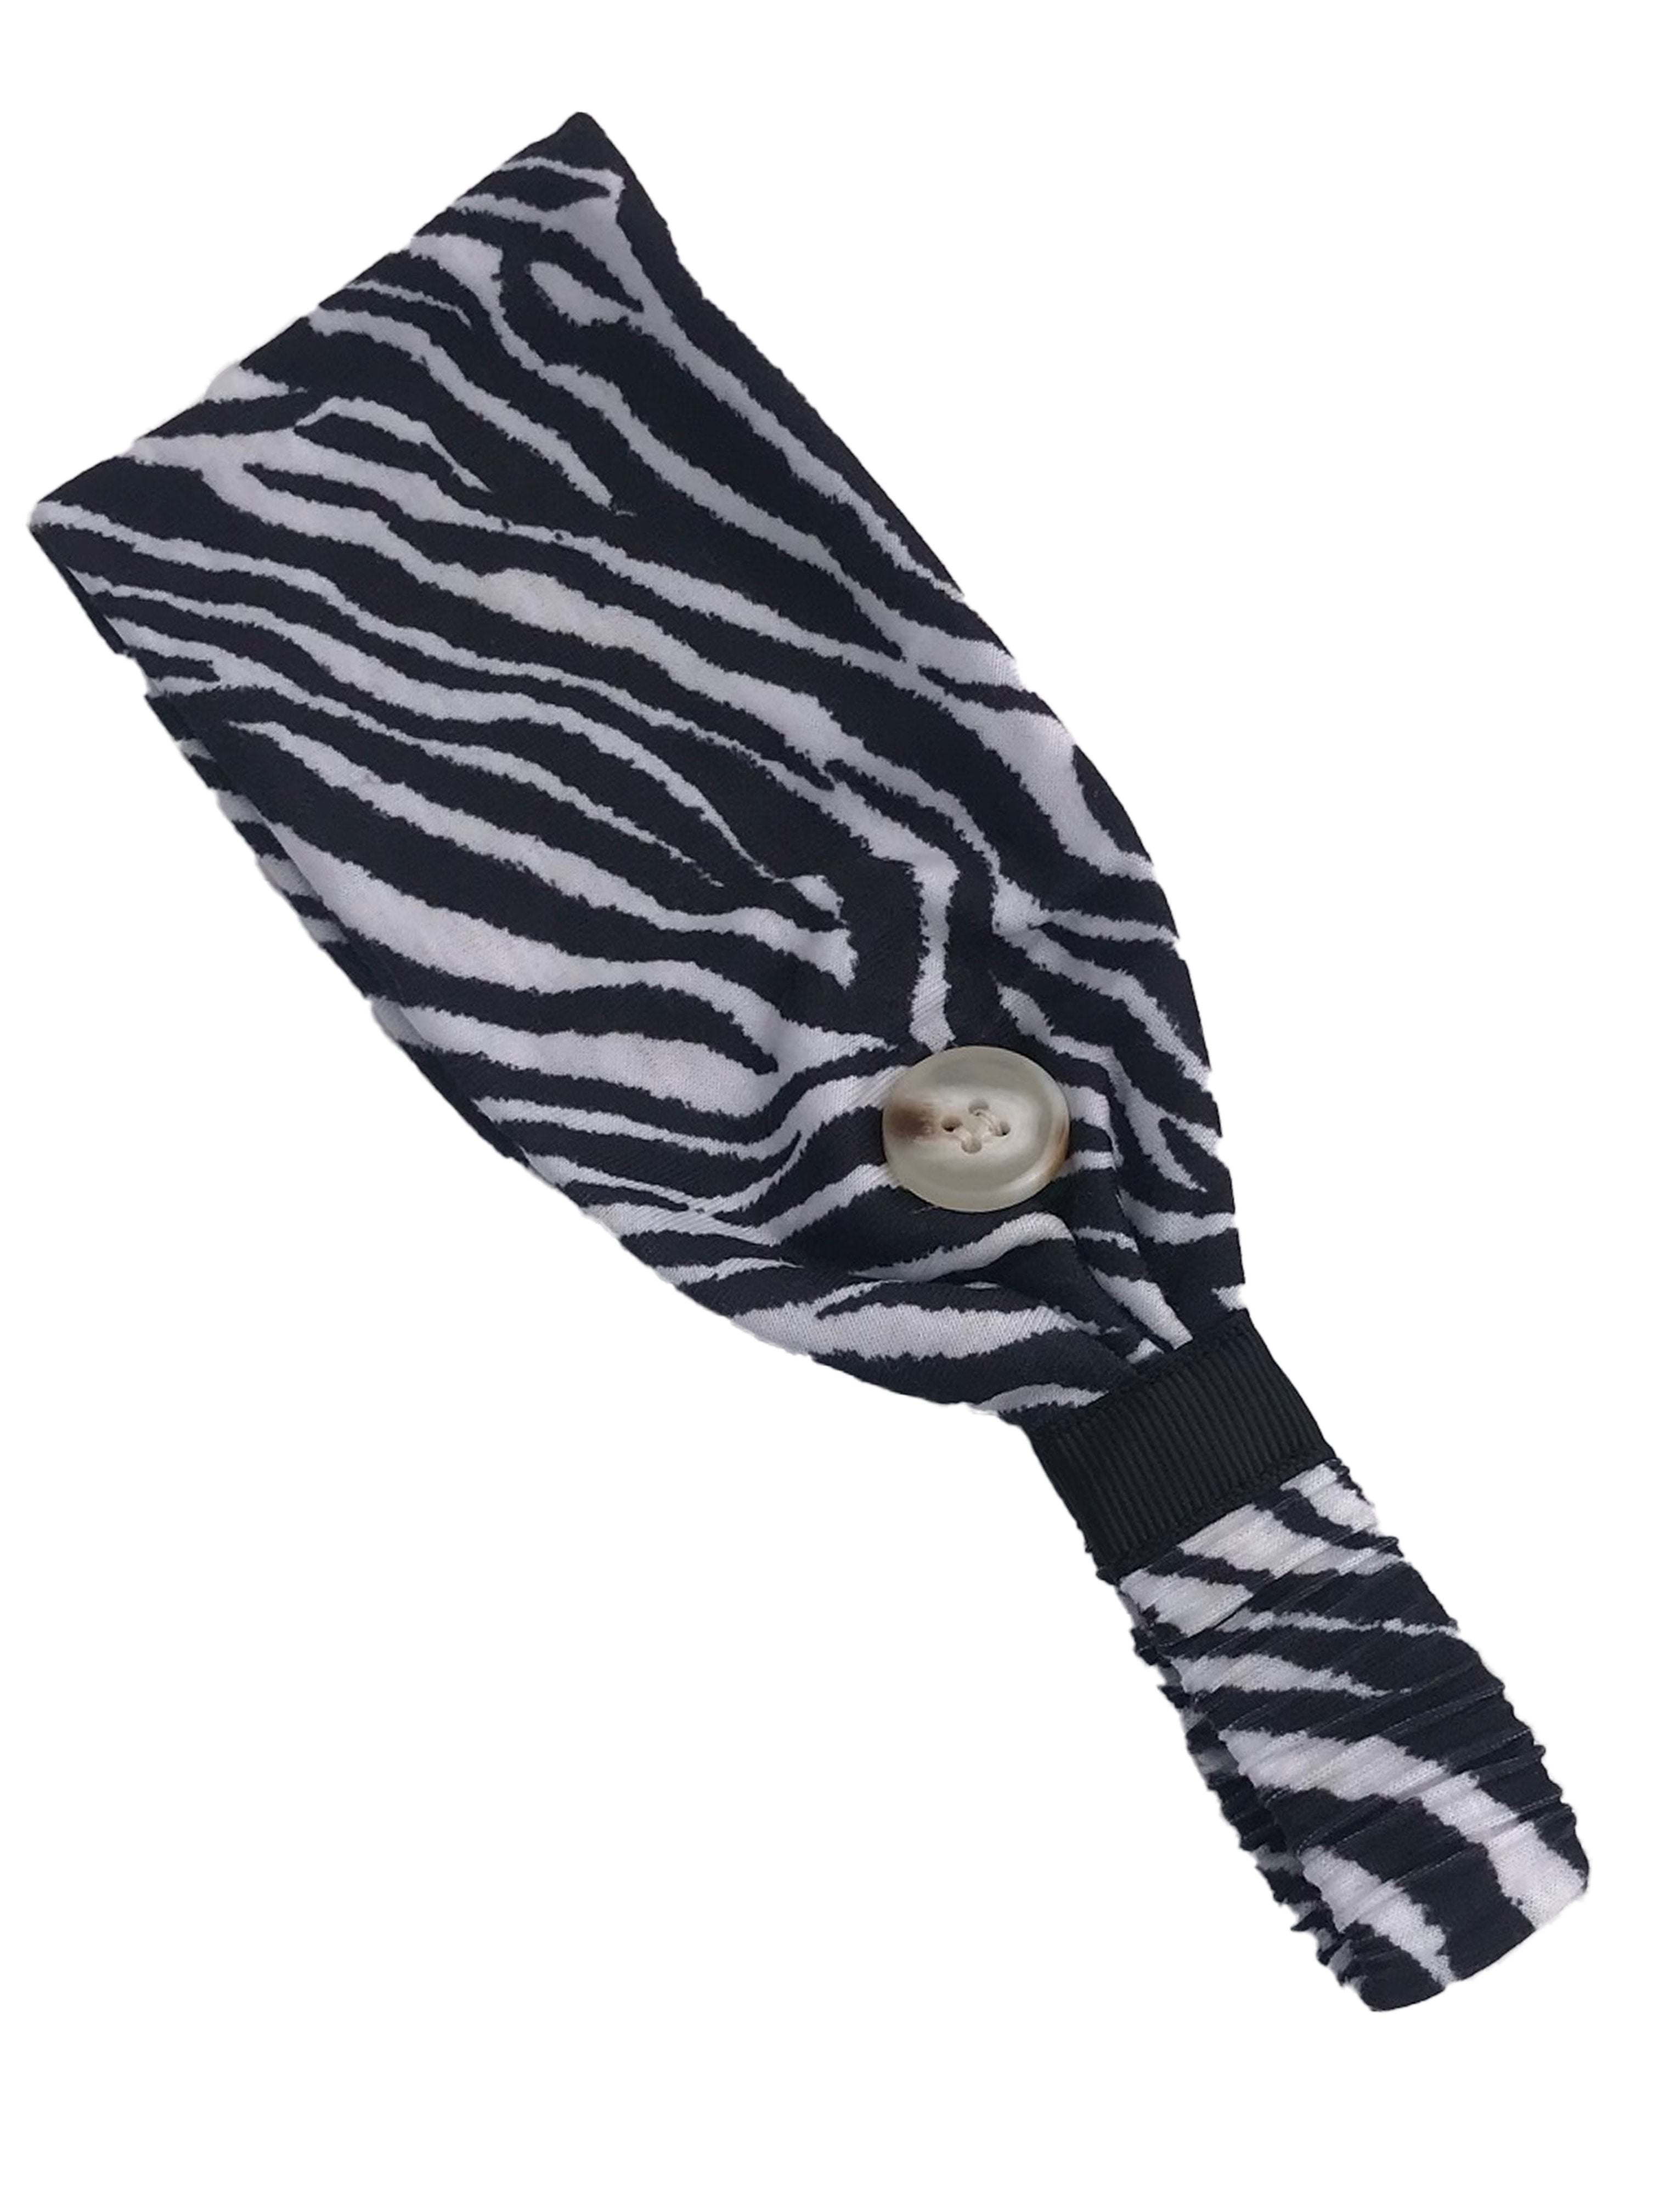 HB-2020 Adult Headband Zebra